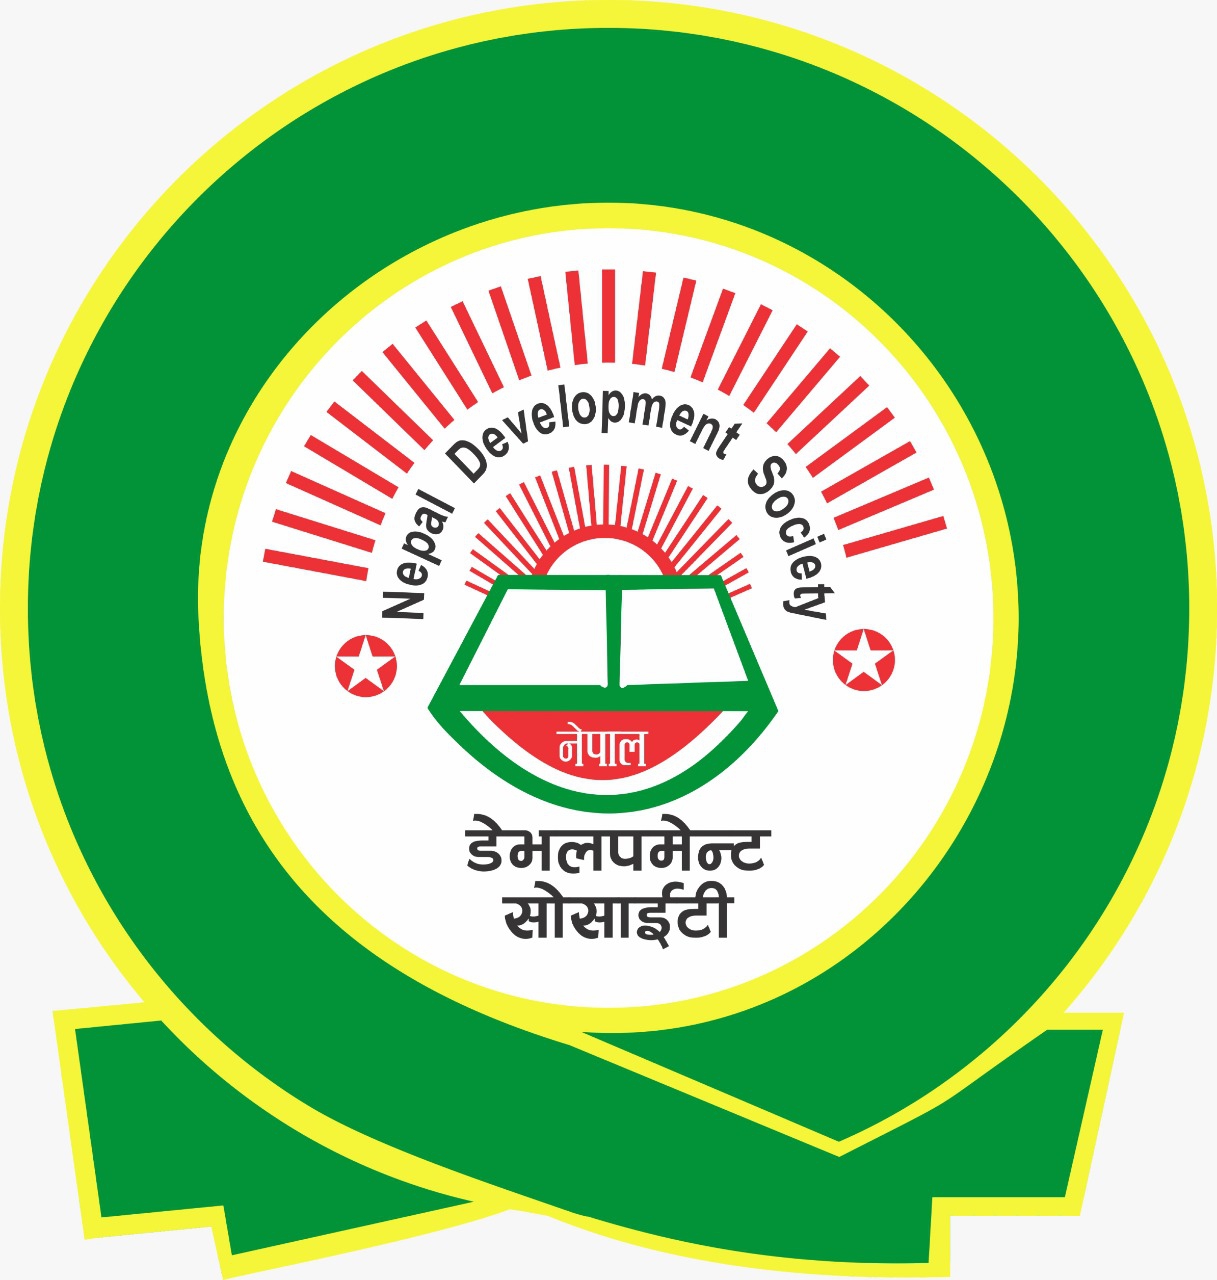 Nepal Development Society (NDS)